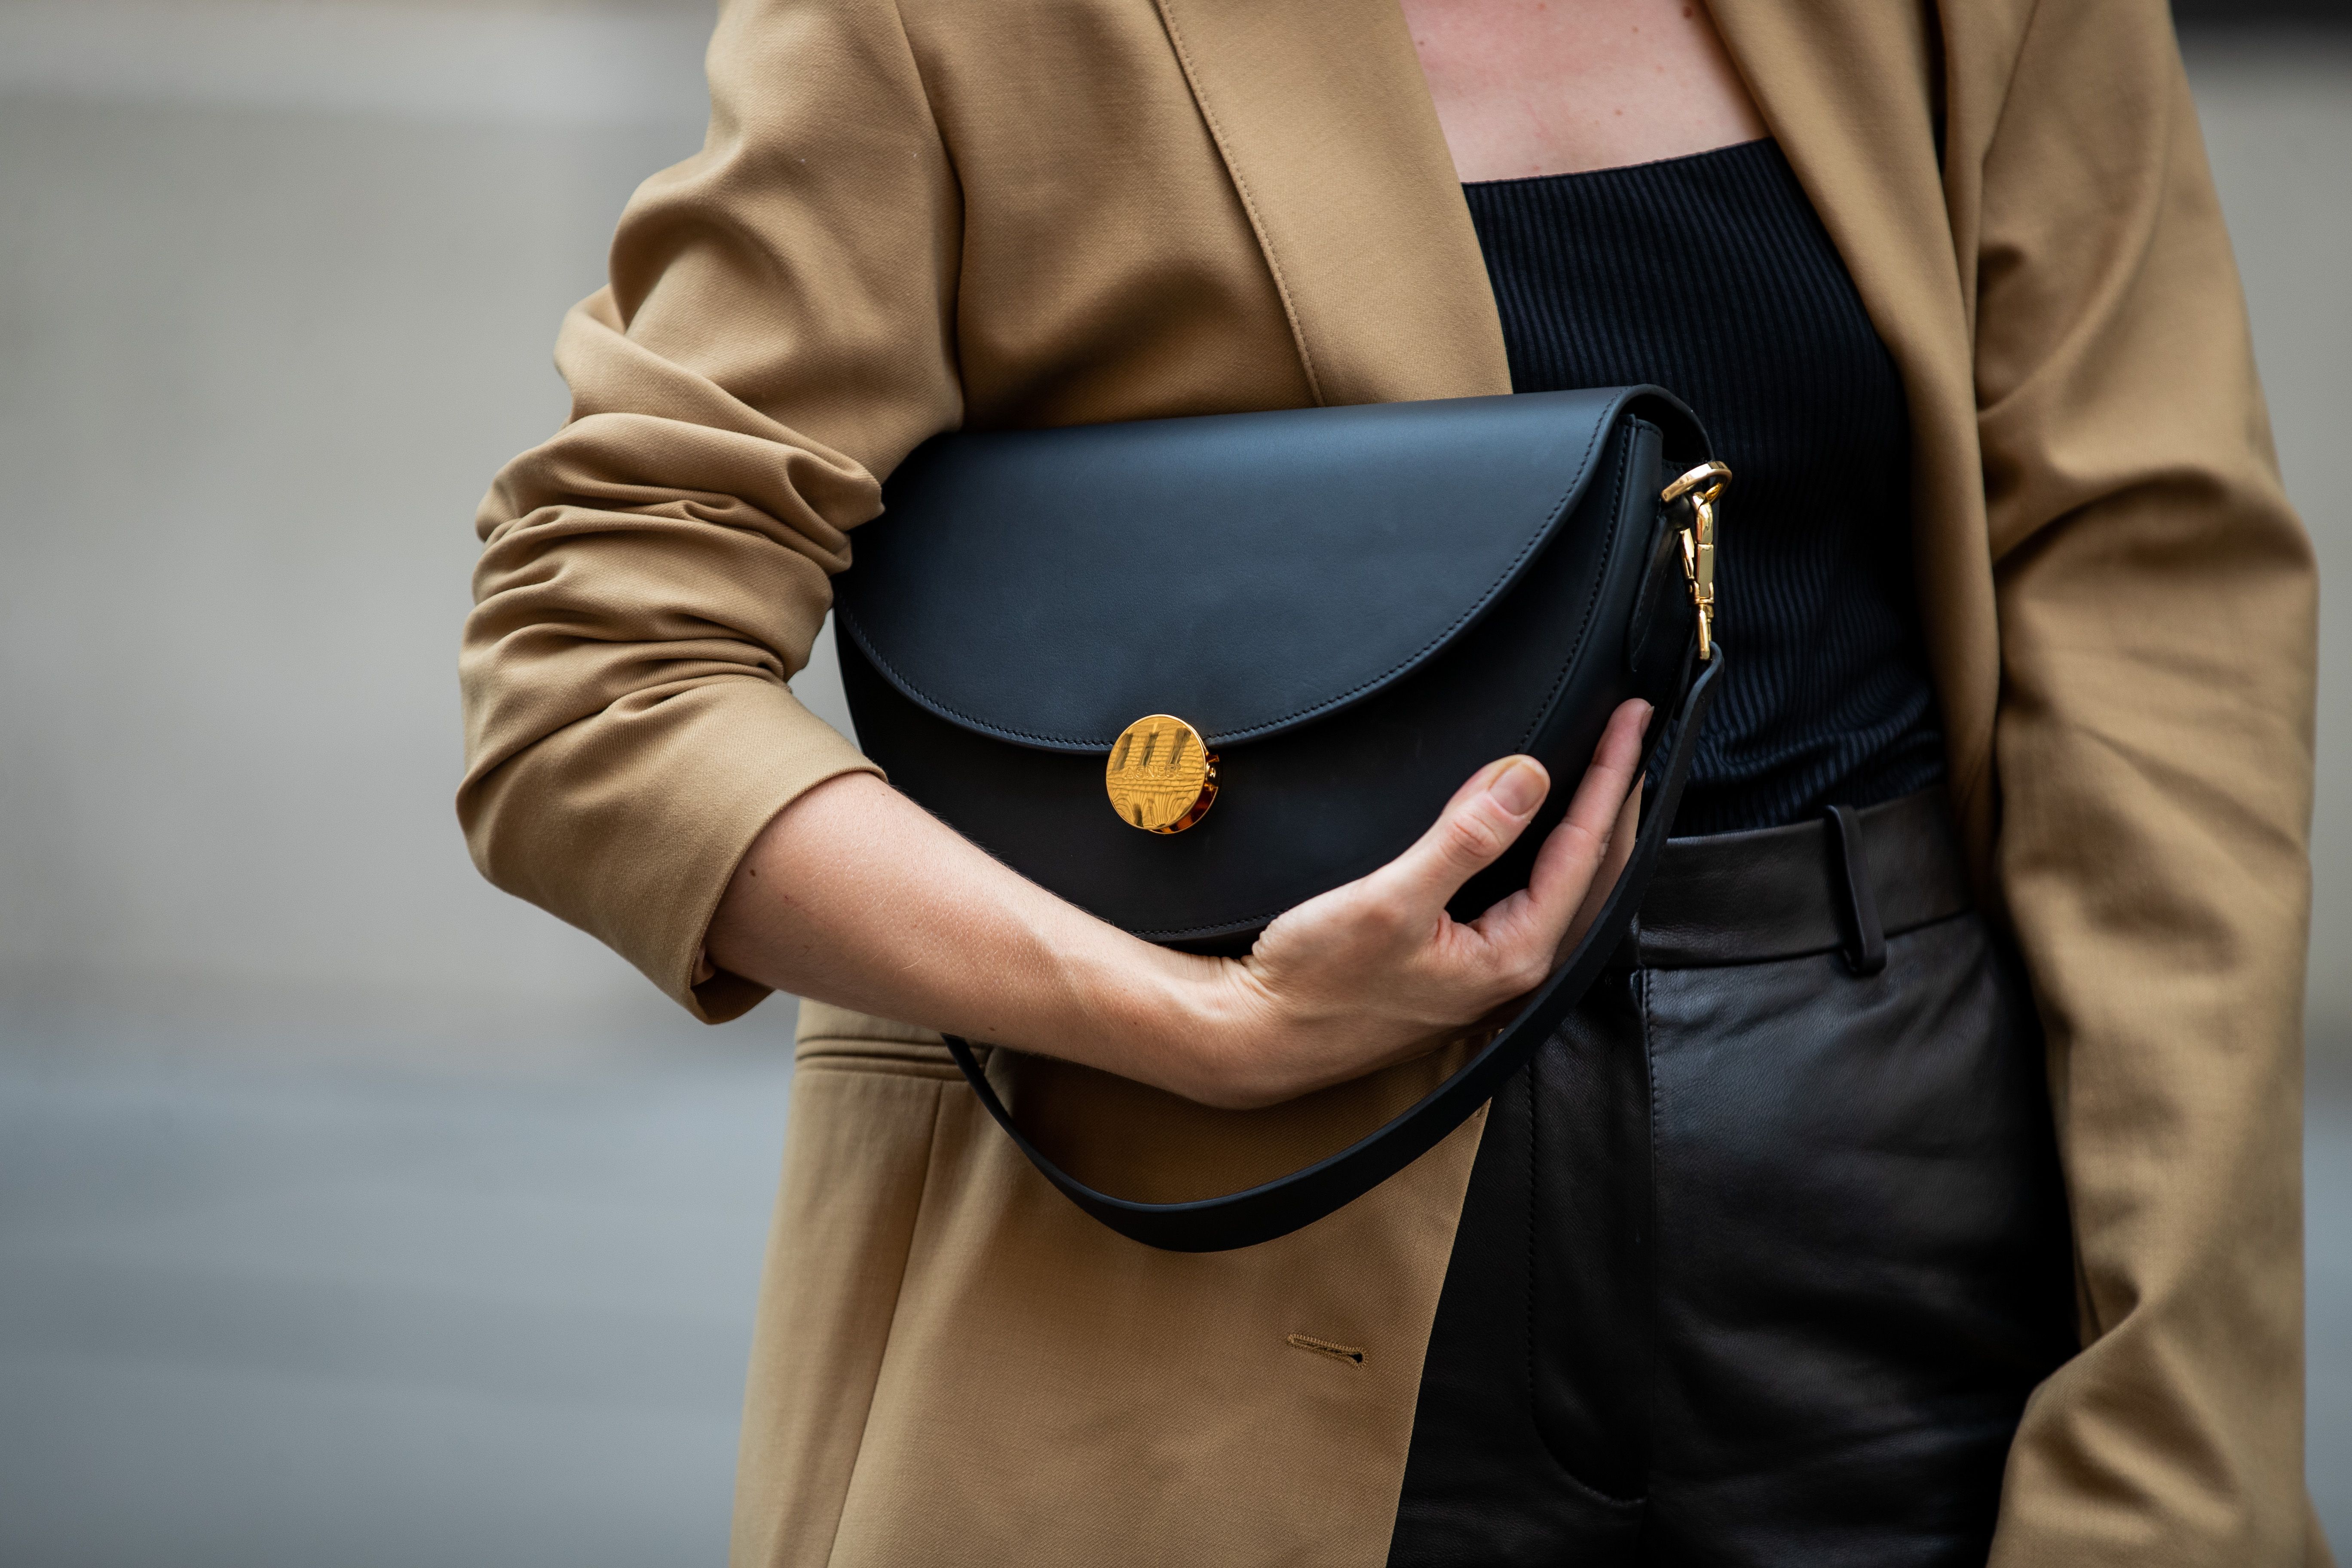 Top Handle Bags For Womens Crossbody Handbags Leather Shoulder Tote Designer Bags Satchel Bag Business Office